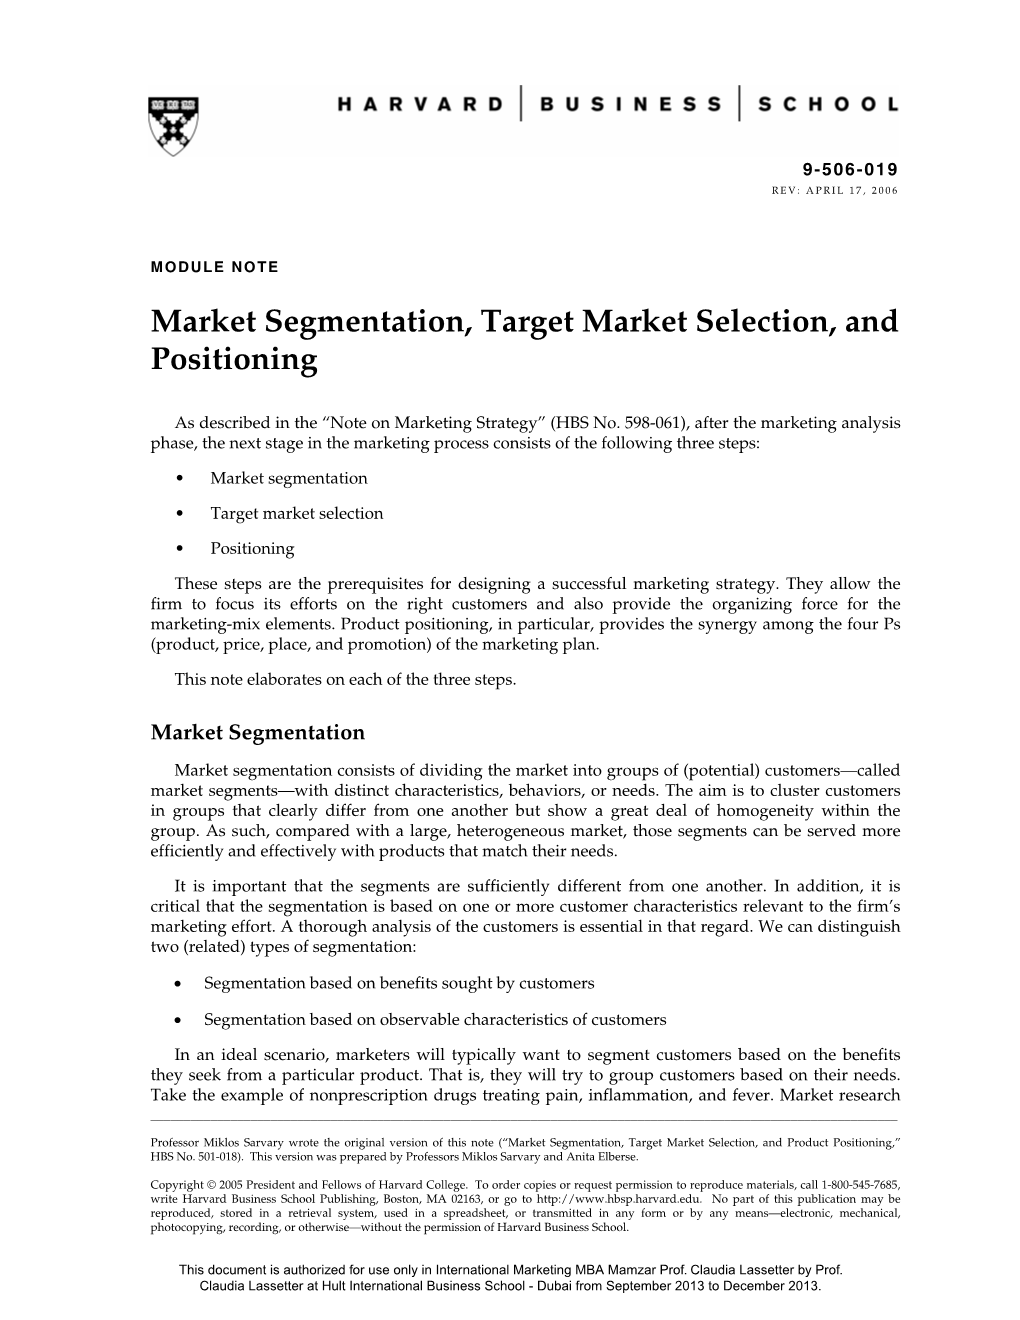 Module Note—Market Segmentation, Target Market Selection, and Positioning